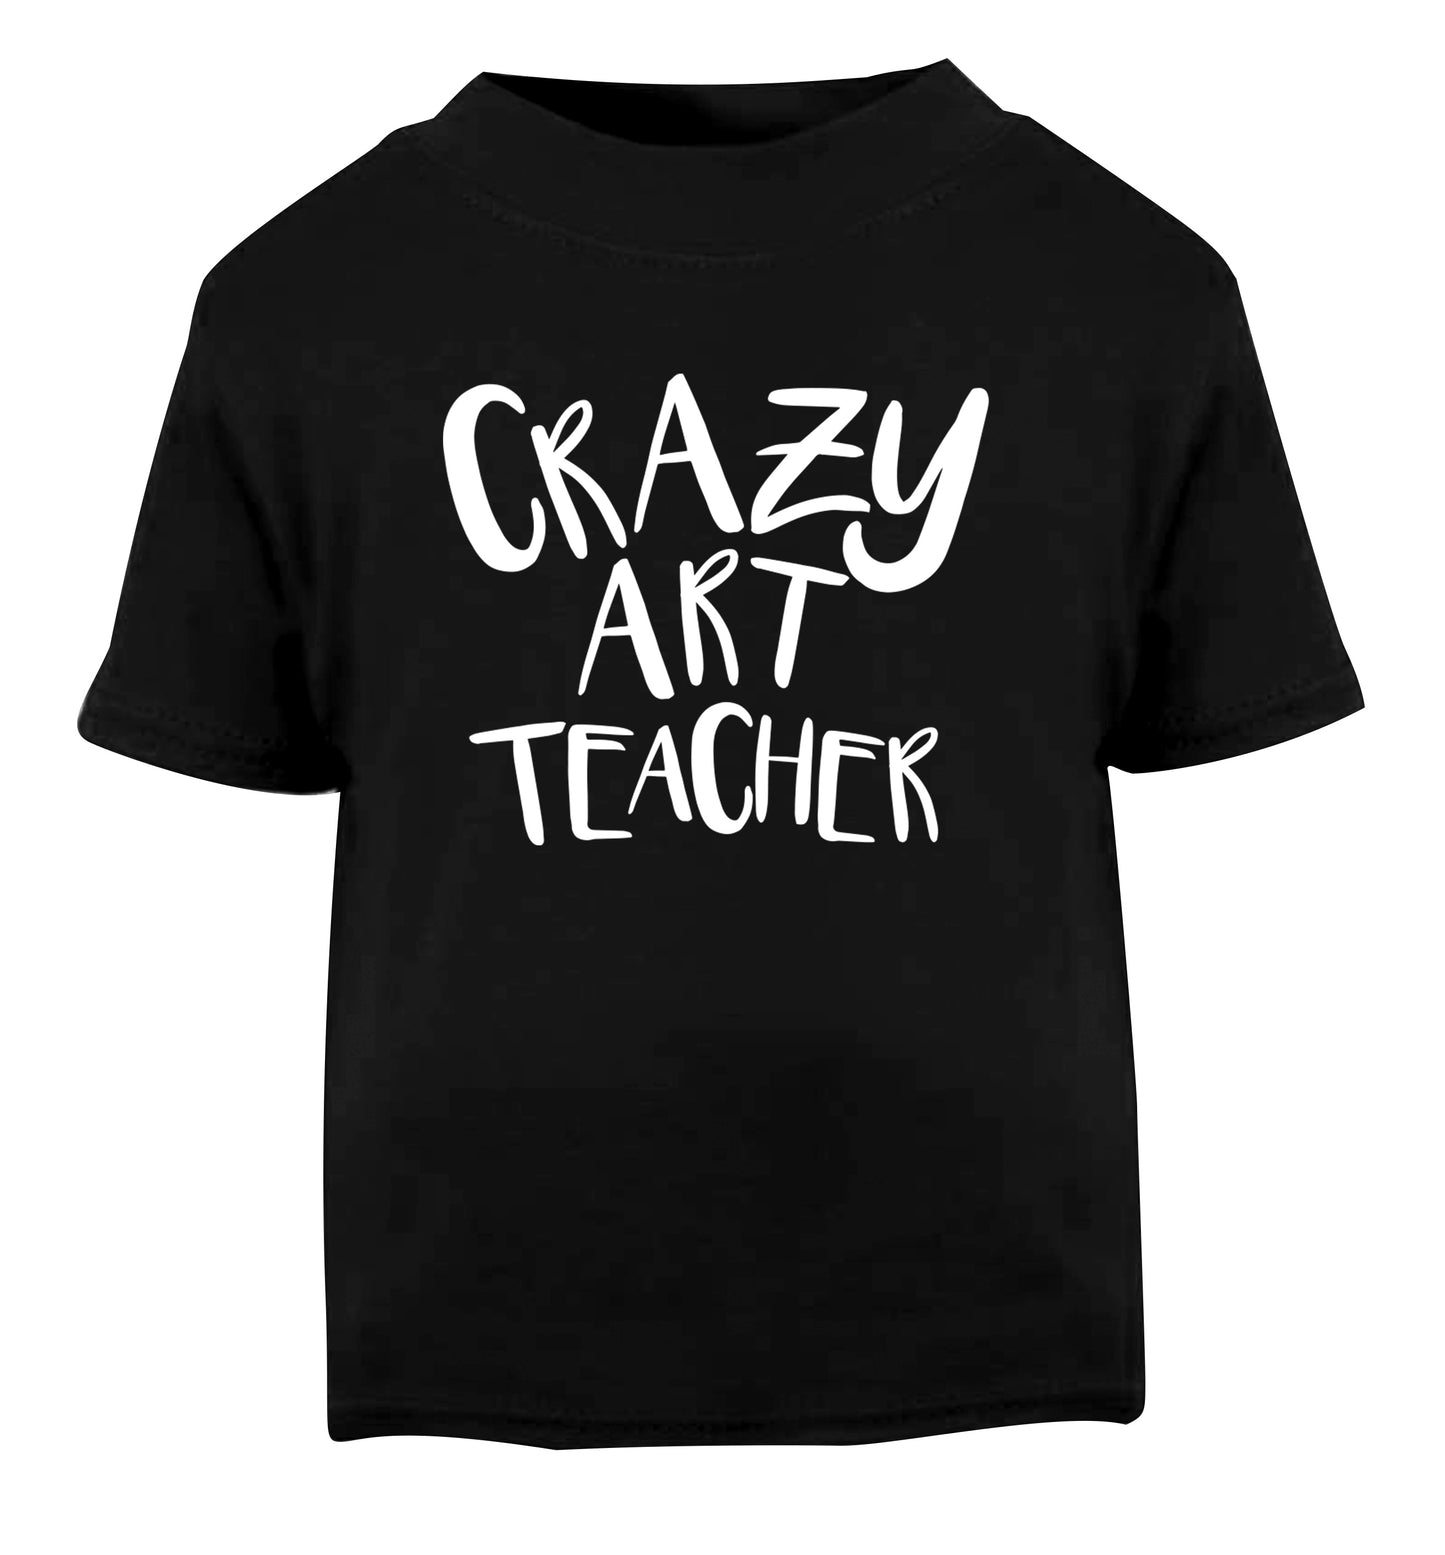 Crazy art teacher Black Baby Toddler Tshirt 2 years